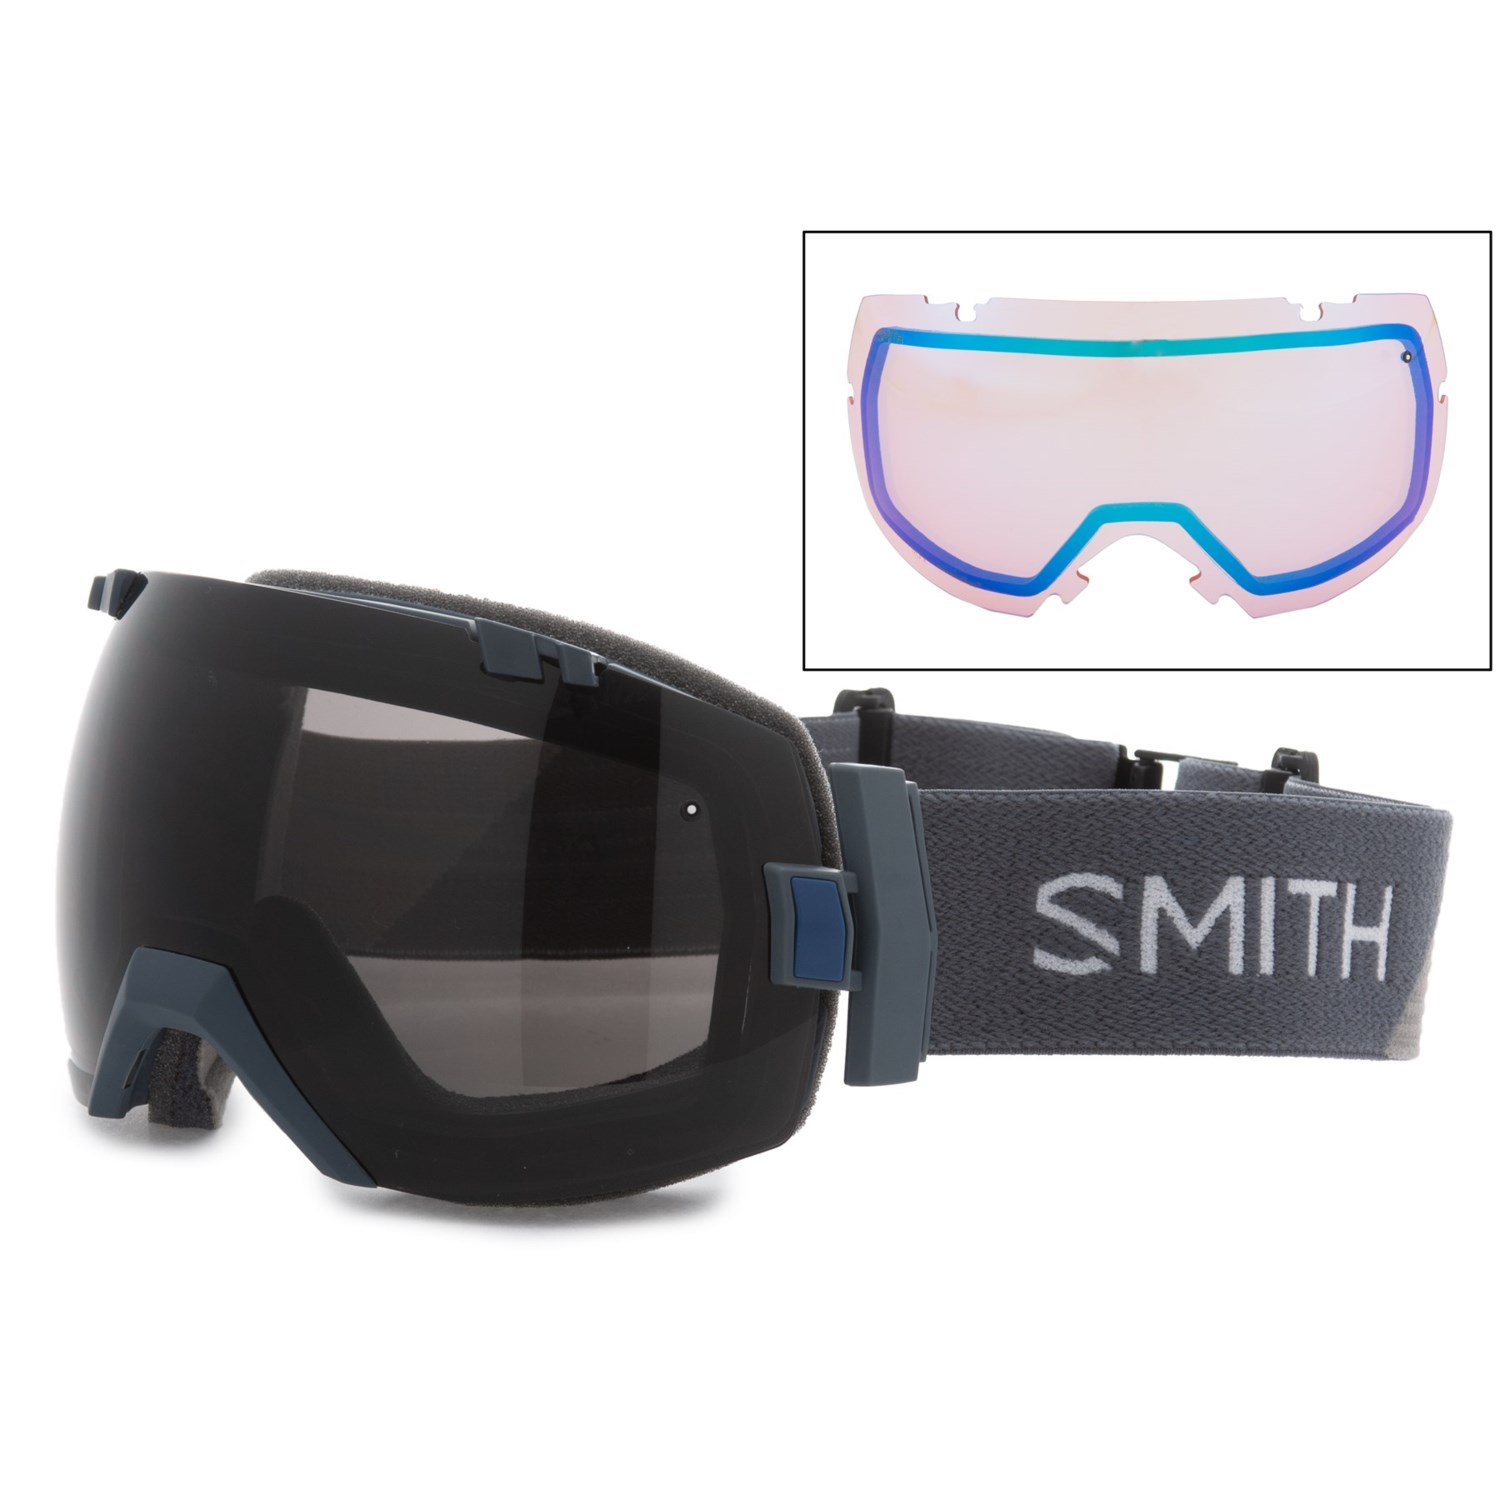 smith-optics-iandox-interchangeable-ski-goggles-extra-lens-polarized-in-chromapop-sun-black-thunder-split~p~504yp_02~1500.2.jpg